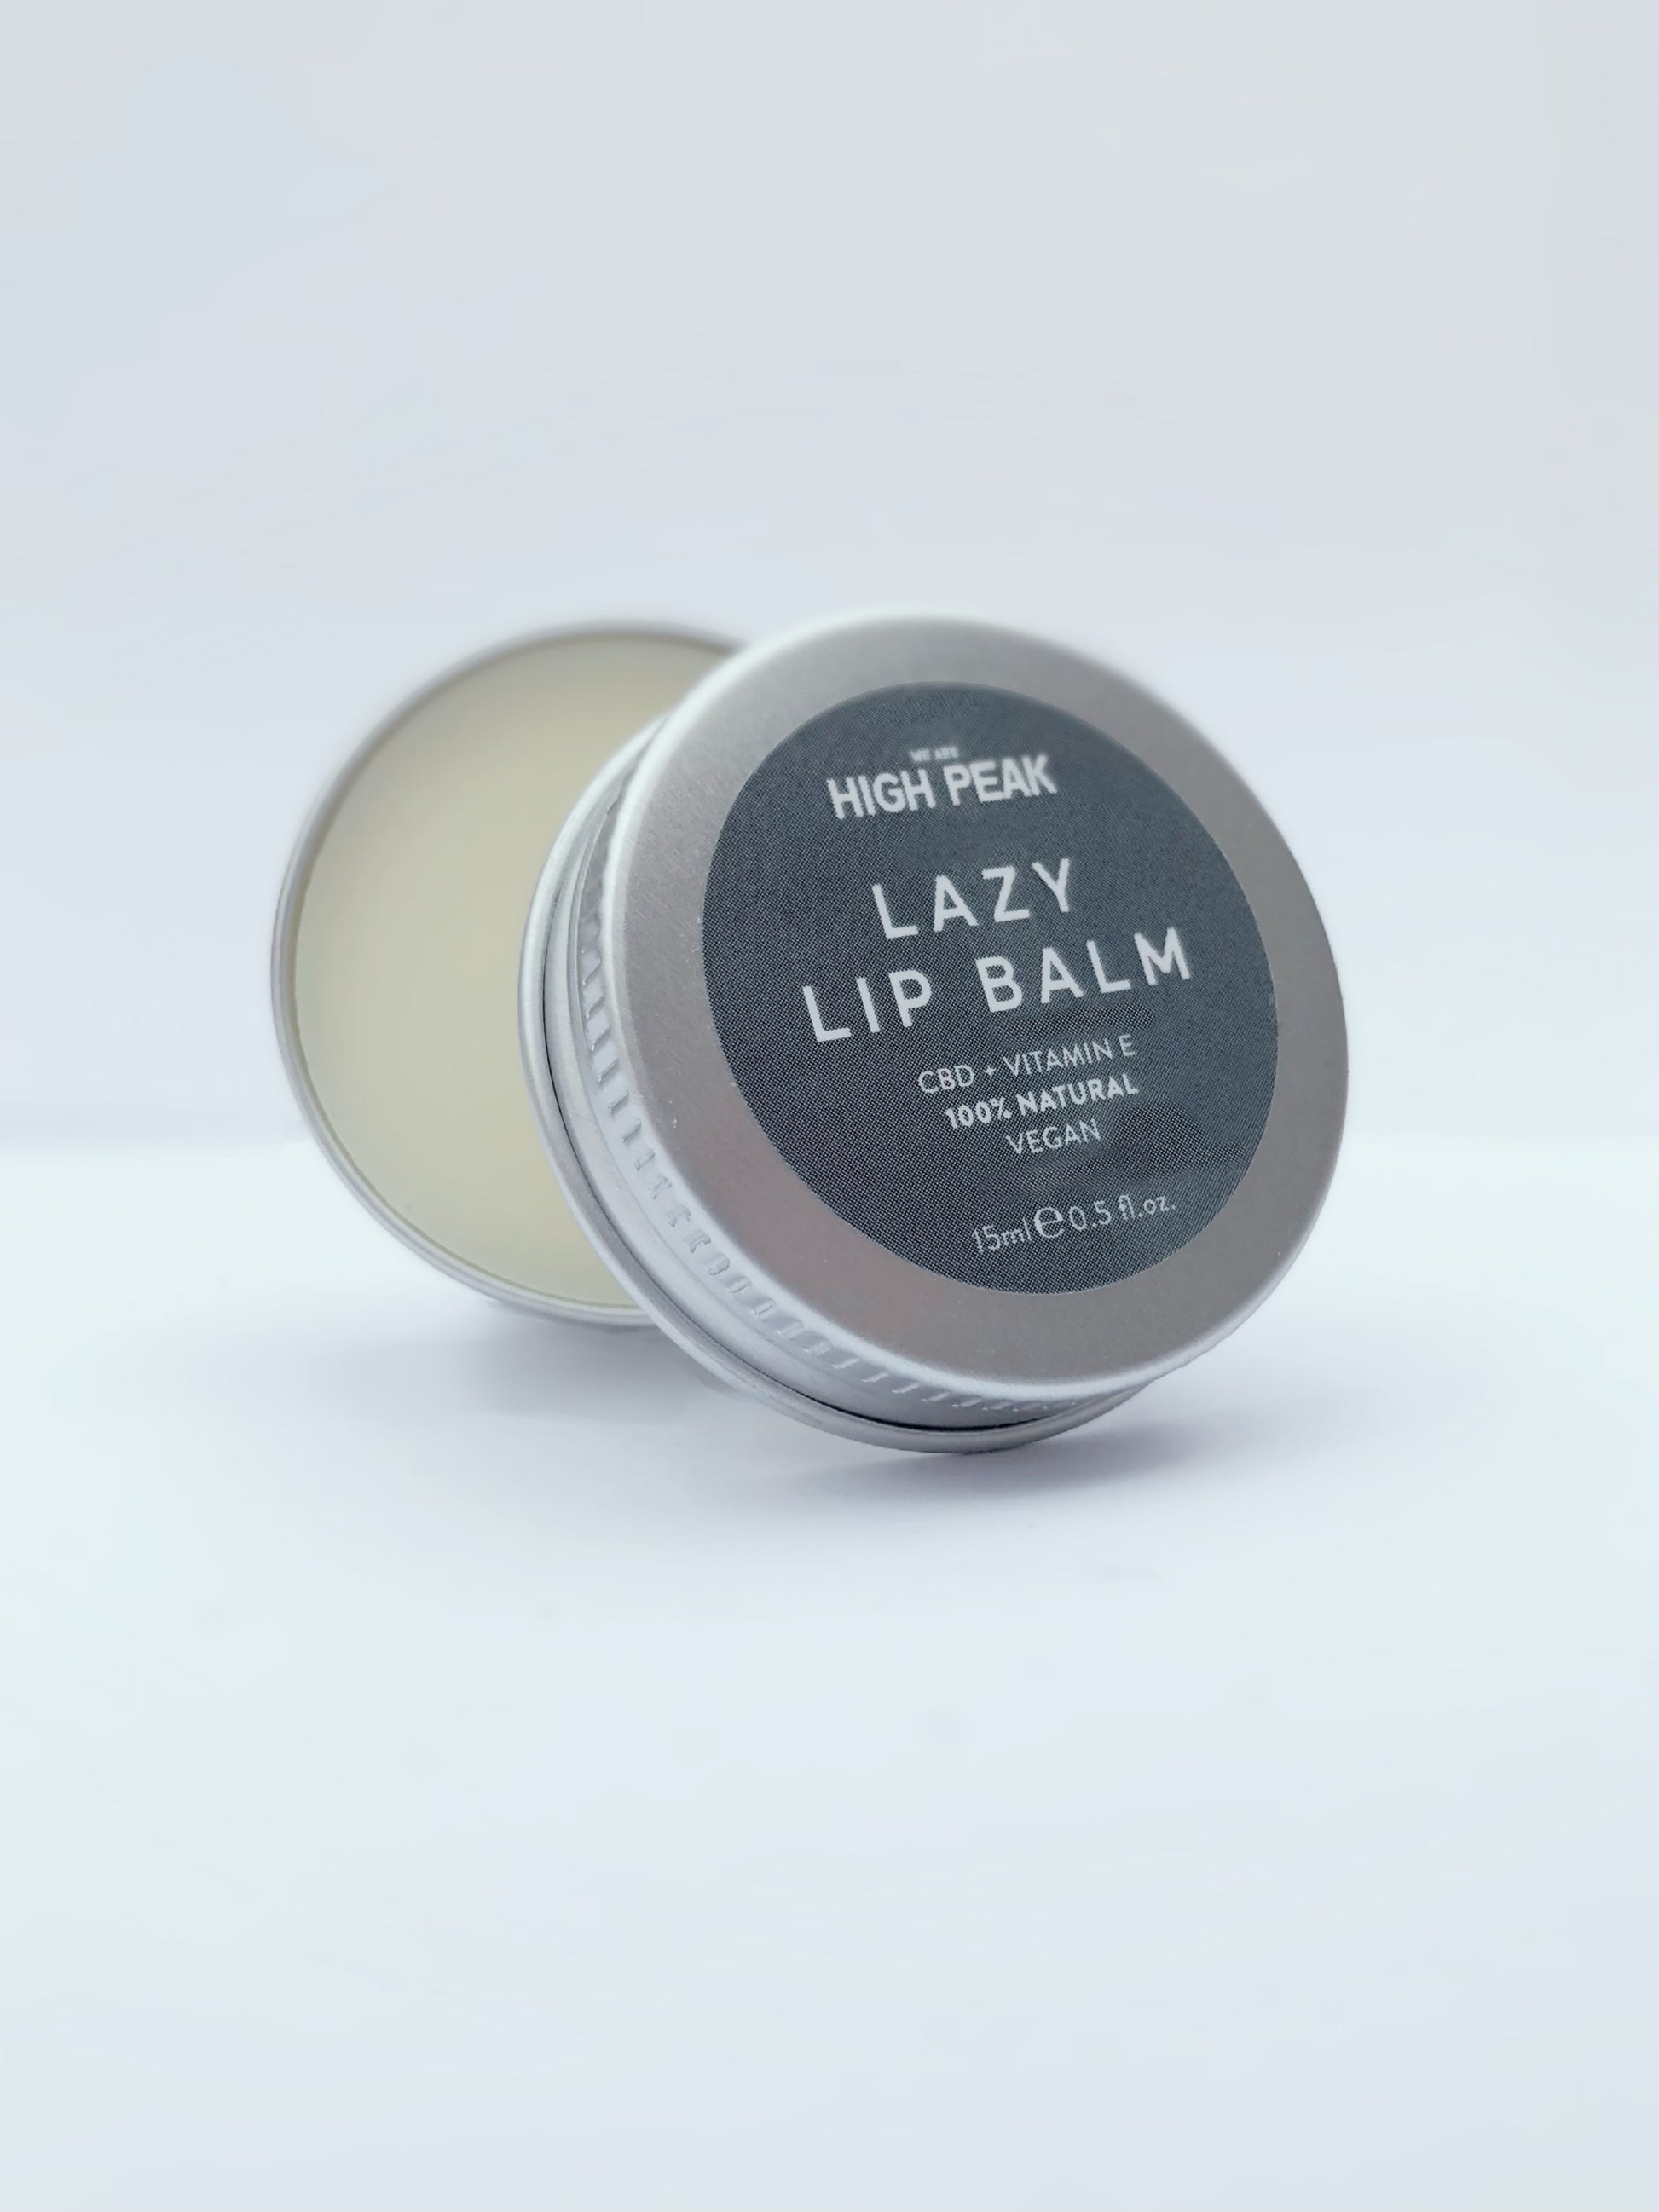 CBD Lazy Lip Balm 15ml - We Are High Peak